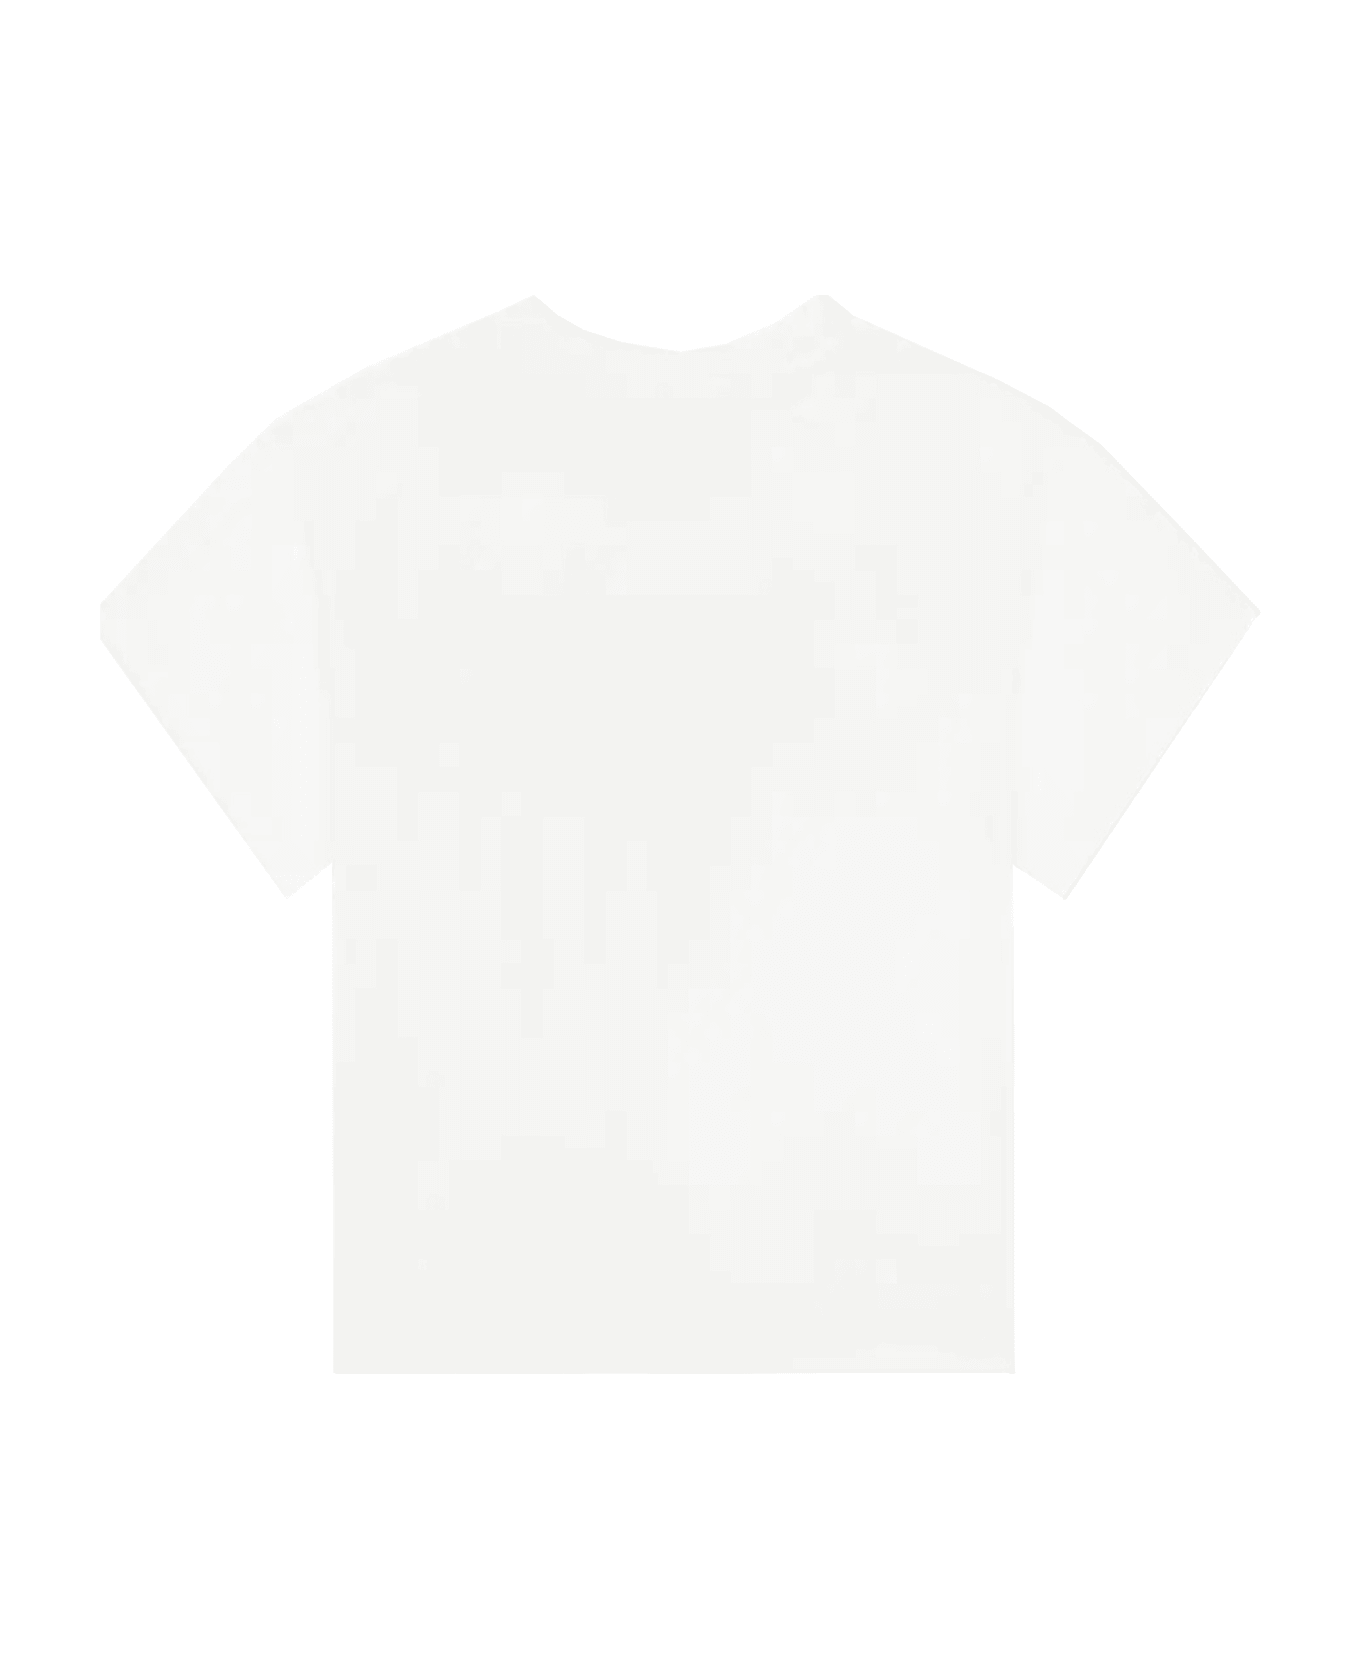 Kenzo T-shirt With Print - White